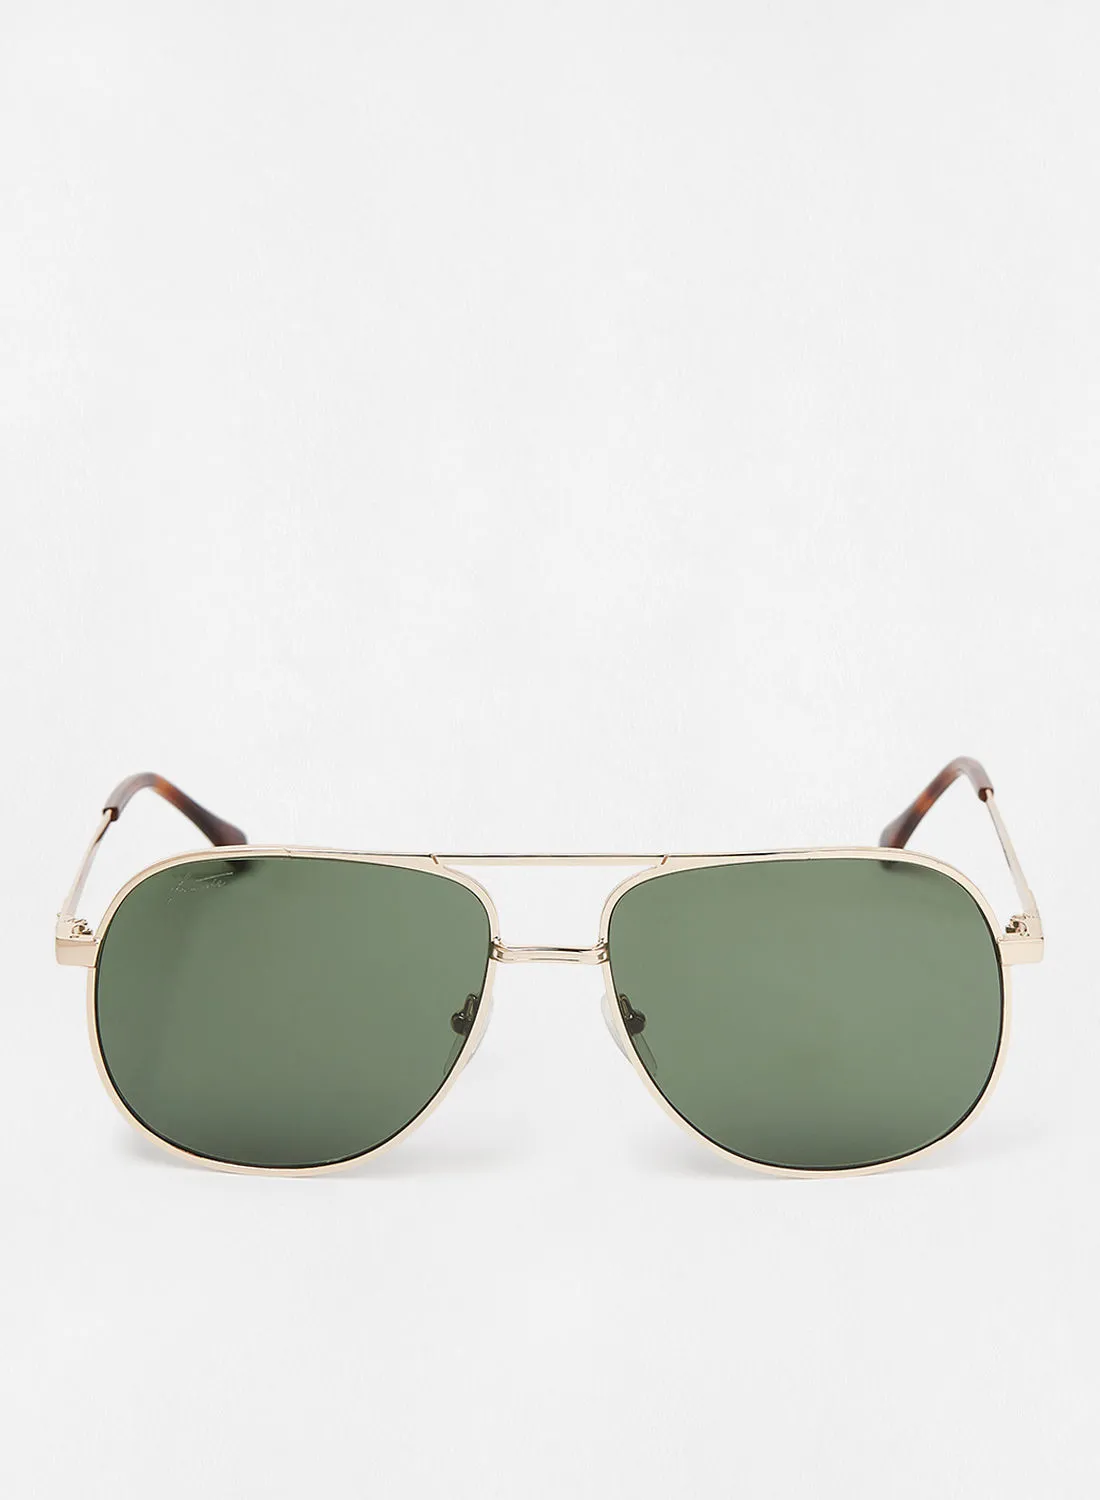 LACOSTE Men's UV Protection Aviator Sunglasses - Lens Size: 60 mm